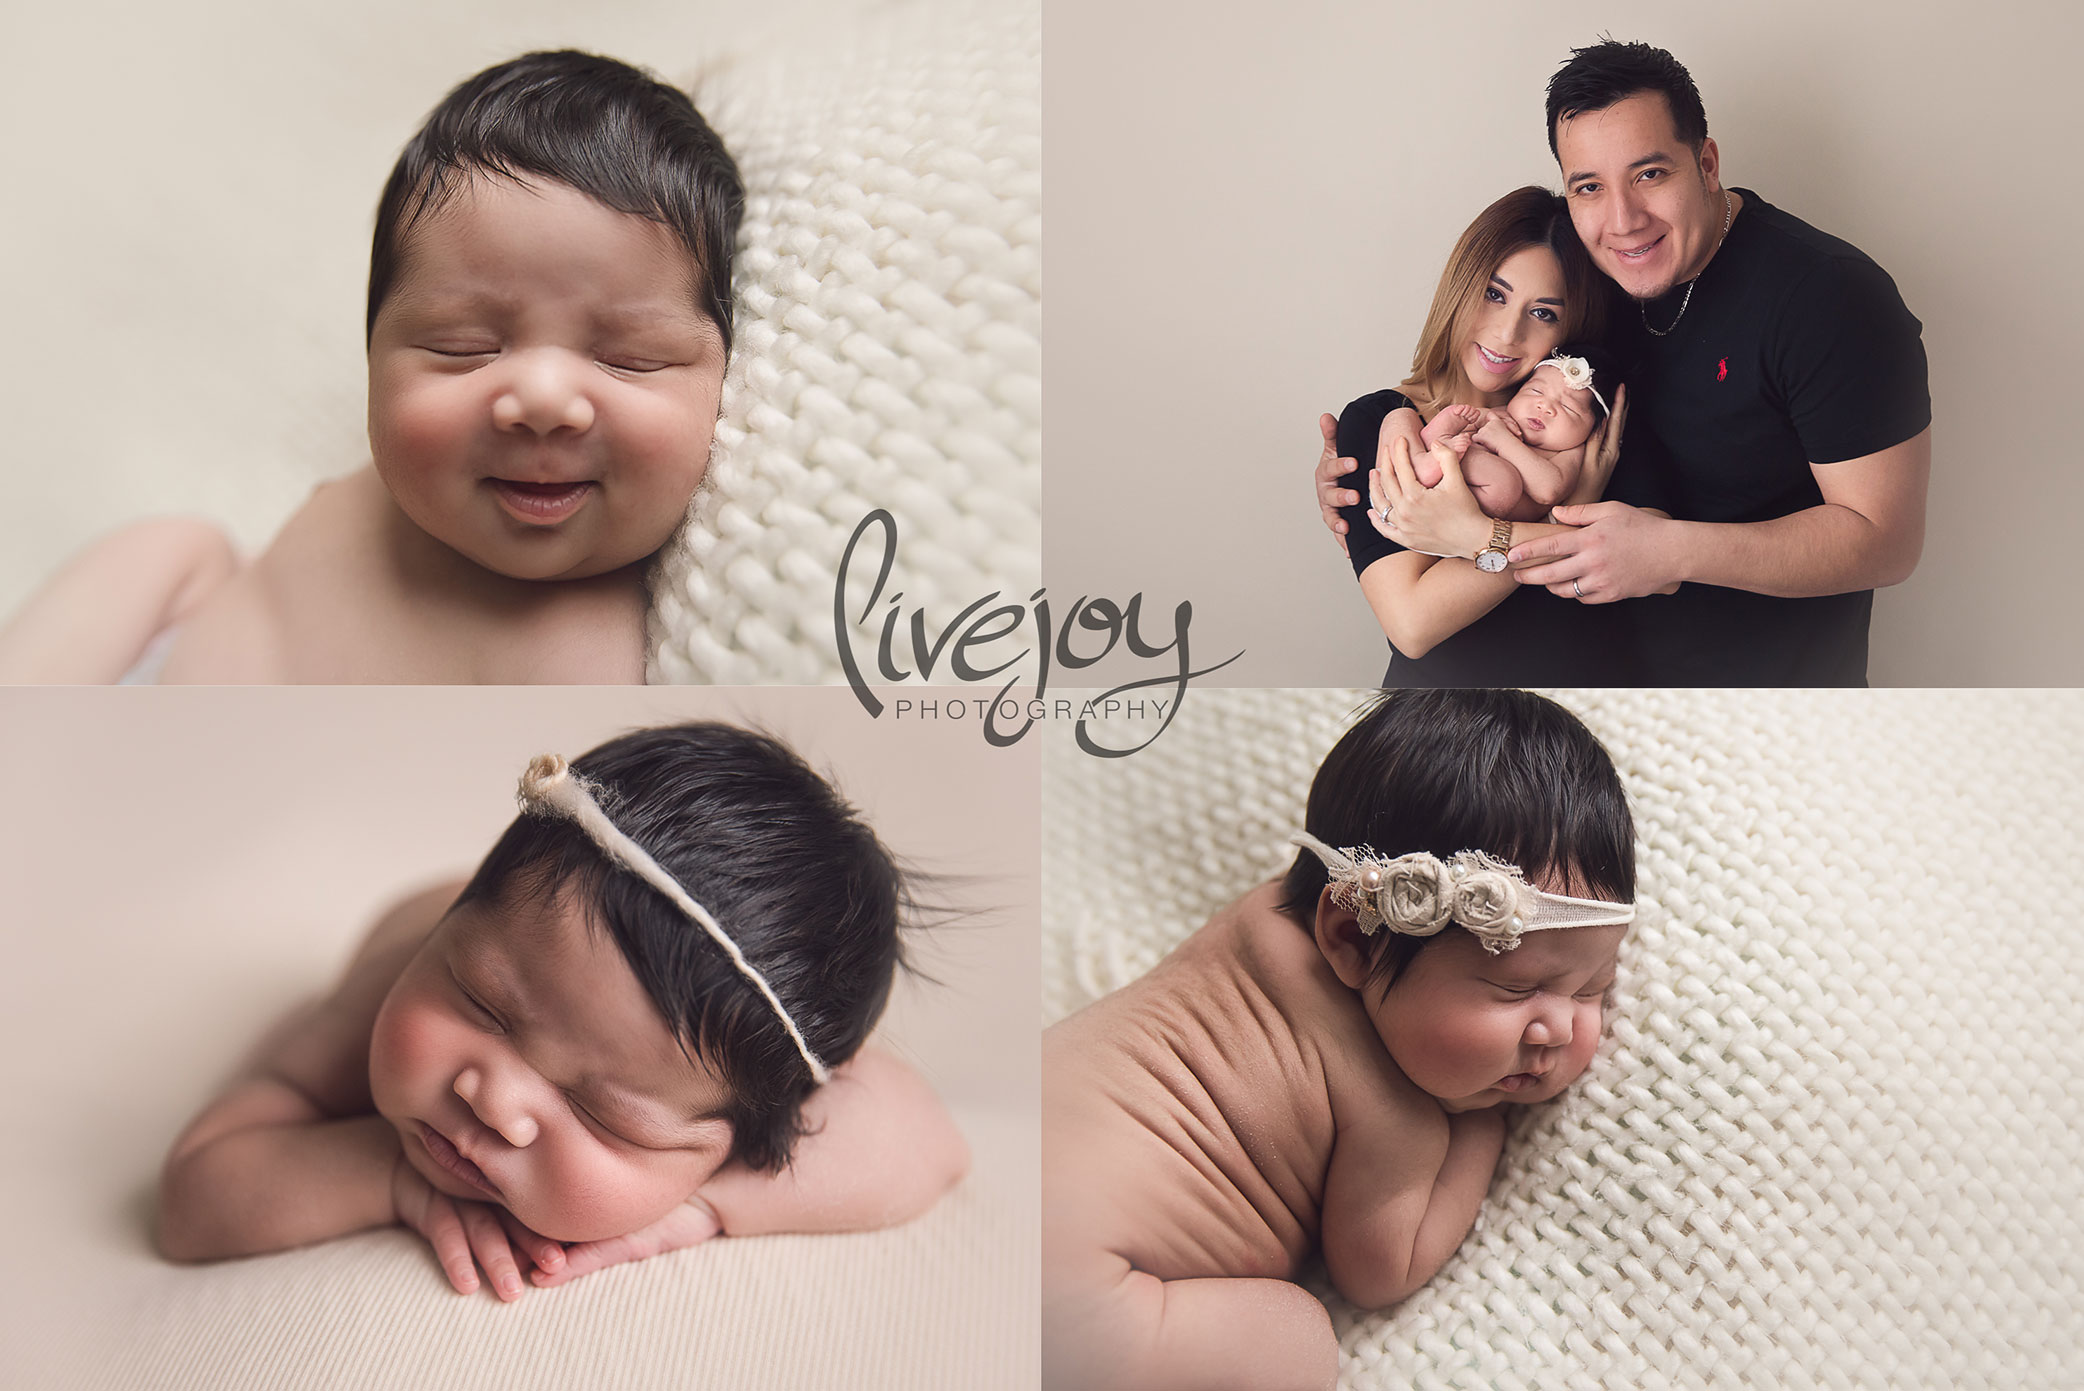 Baby Girl Newborn Photos | Oregon | LiveJoy Photography 